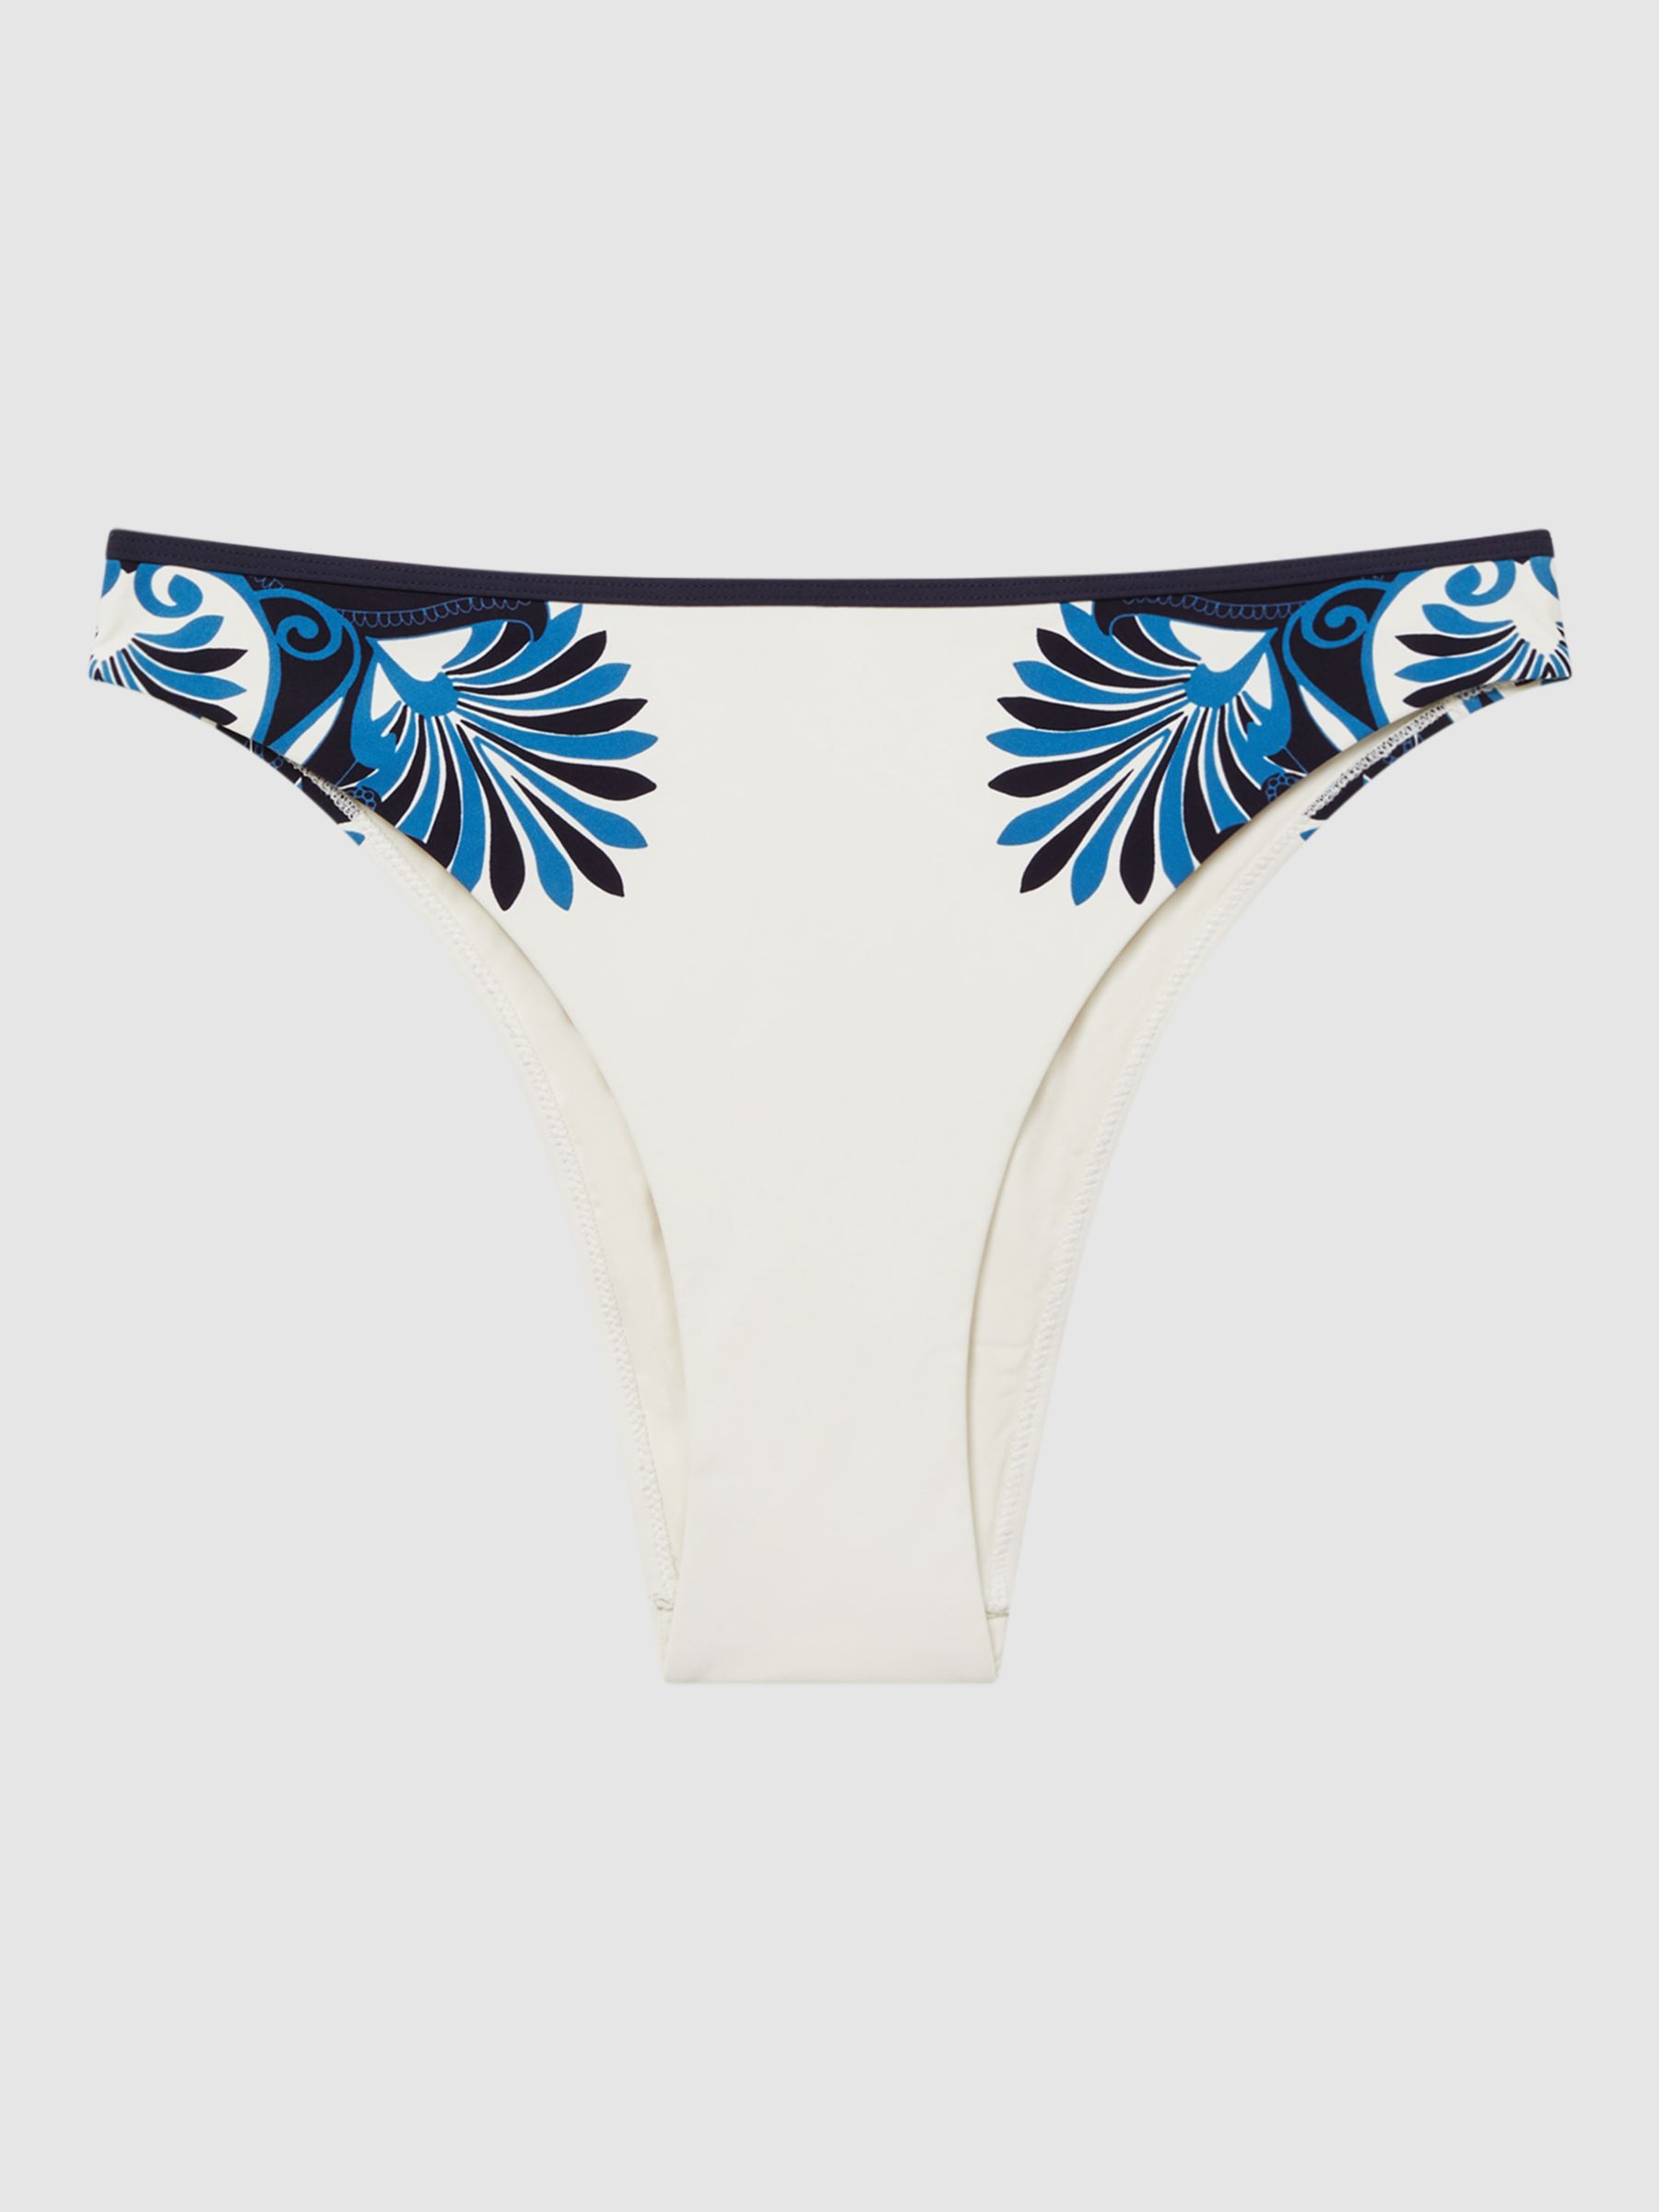 Reiss Lucille Floral Placement Bikini Bottoms, White/Blue, 6